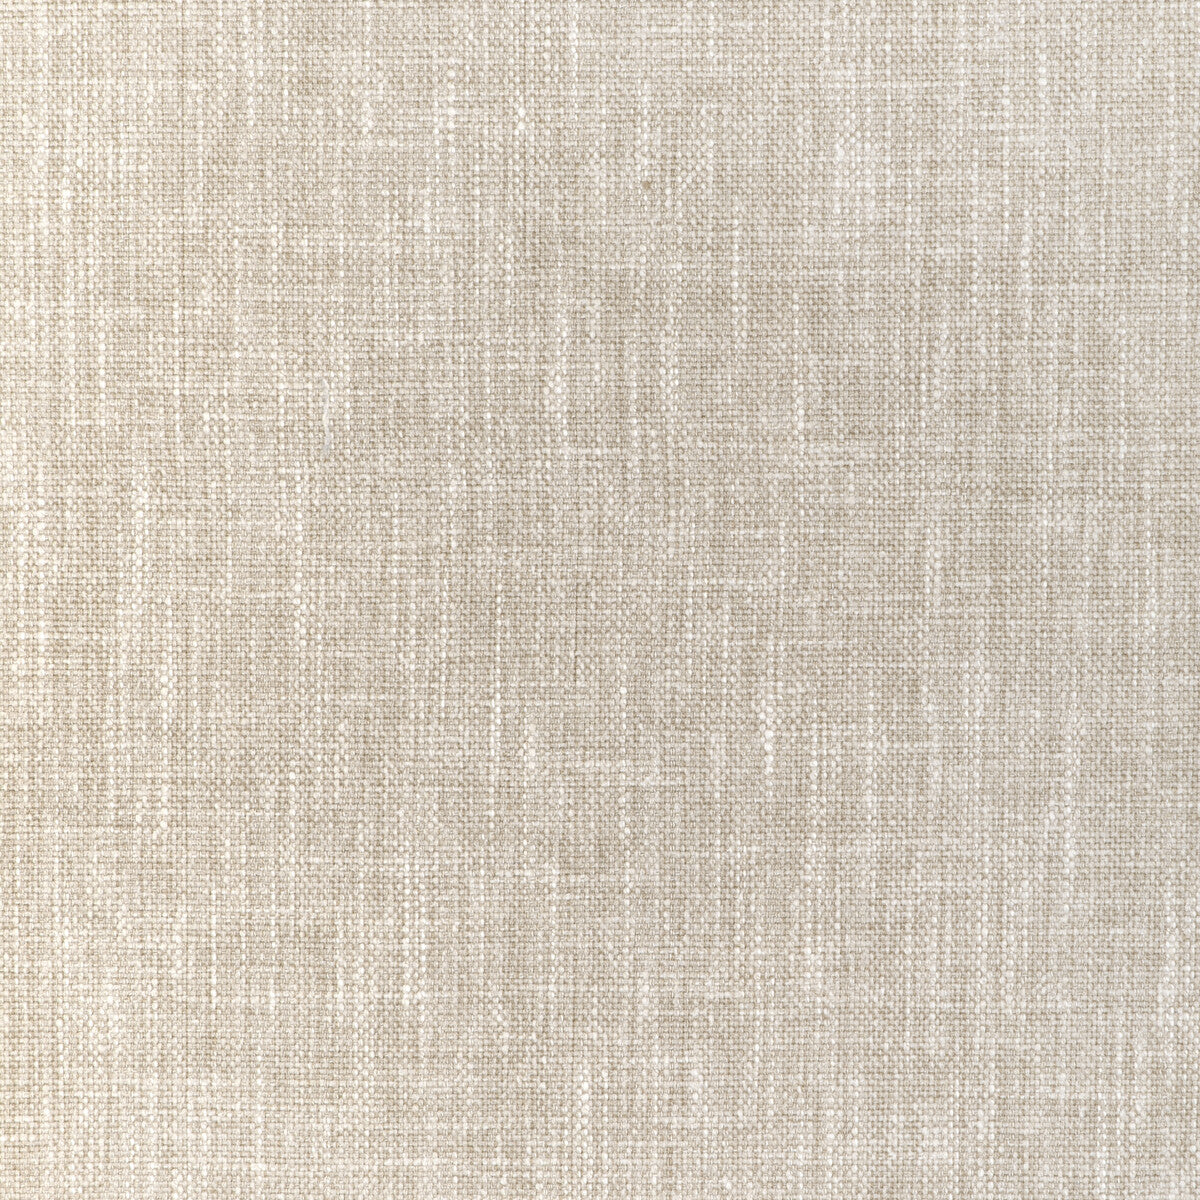 Kravet Smart fabric in 37065-1116 color - pattern 37065.1116.0 - by Kravet Smart